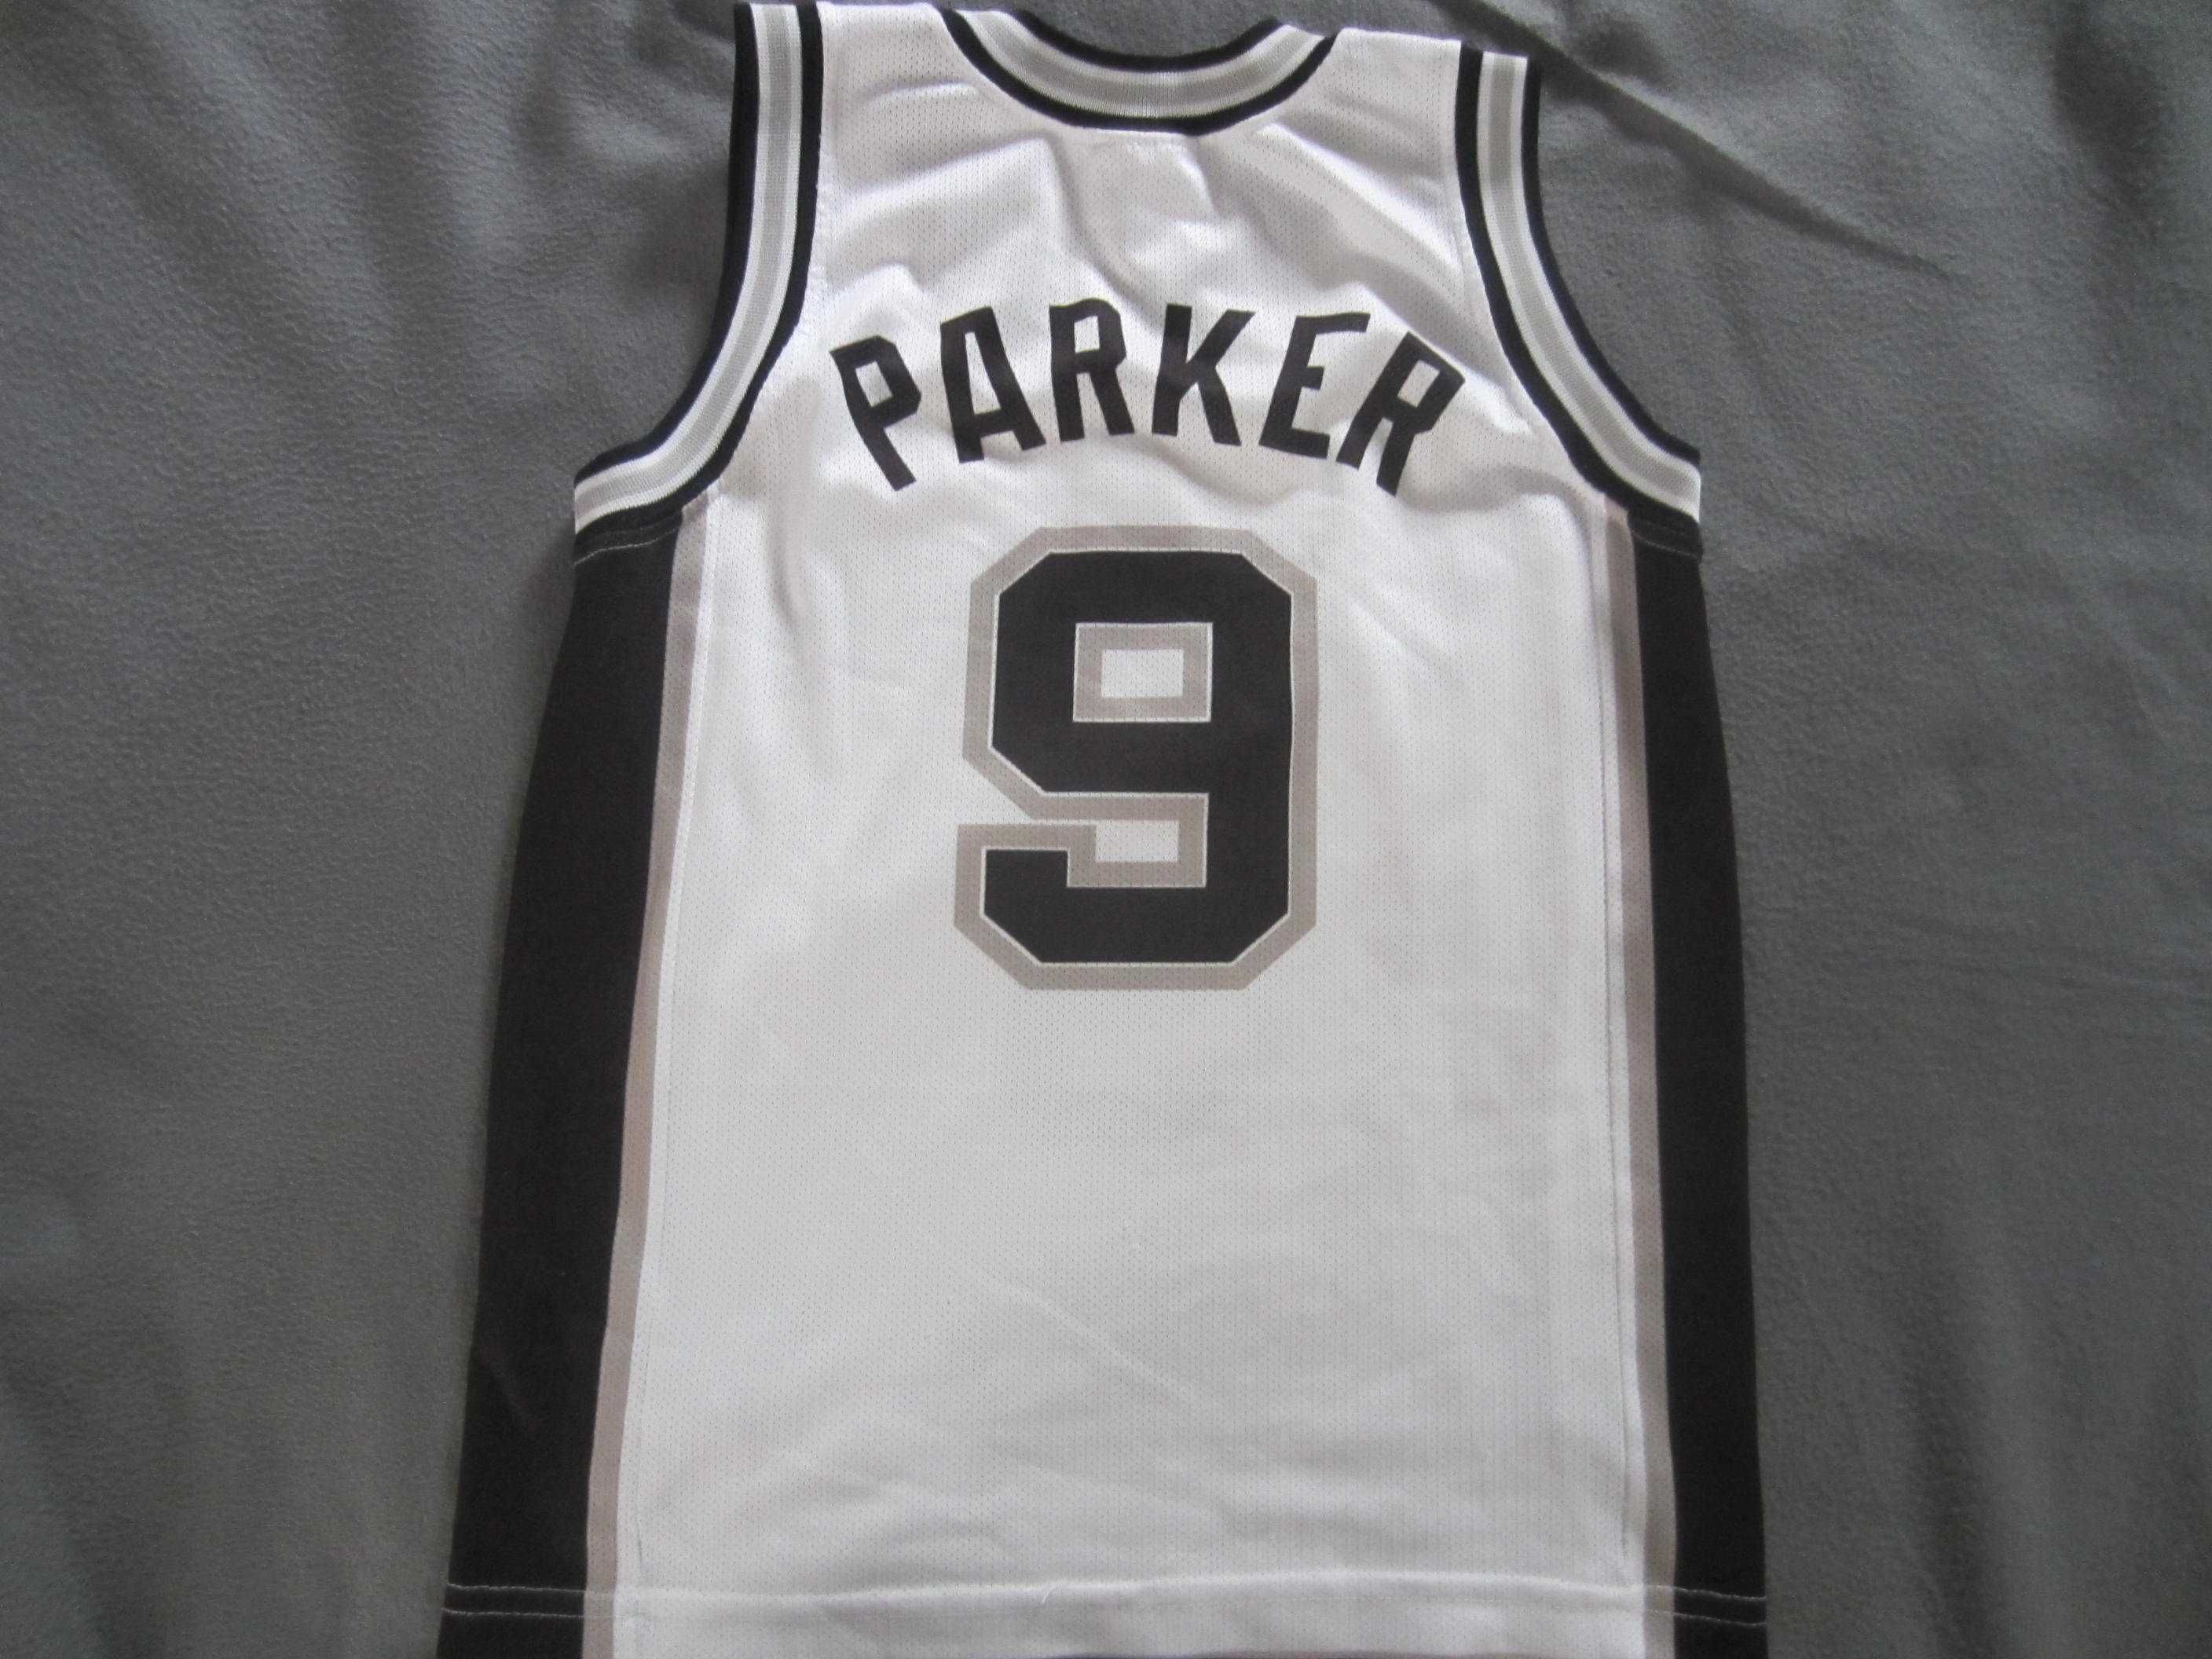 Maieu baschet PARKER,NBA-Spurs,copil 5-6ani mas.XS(114),Champion